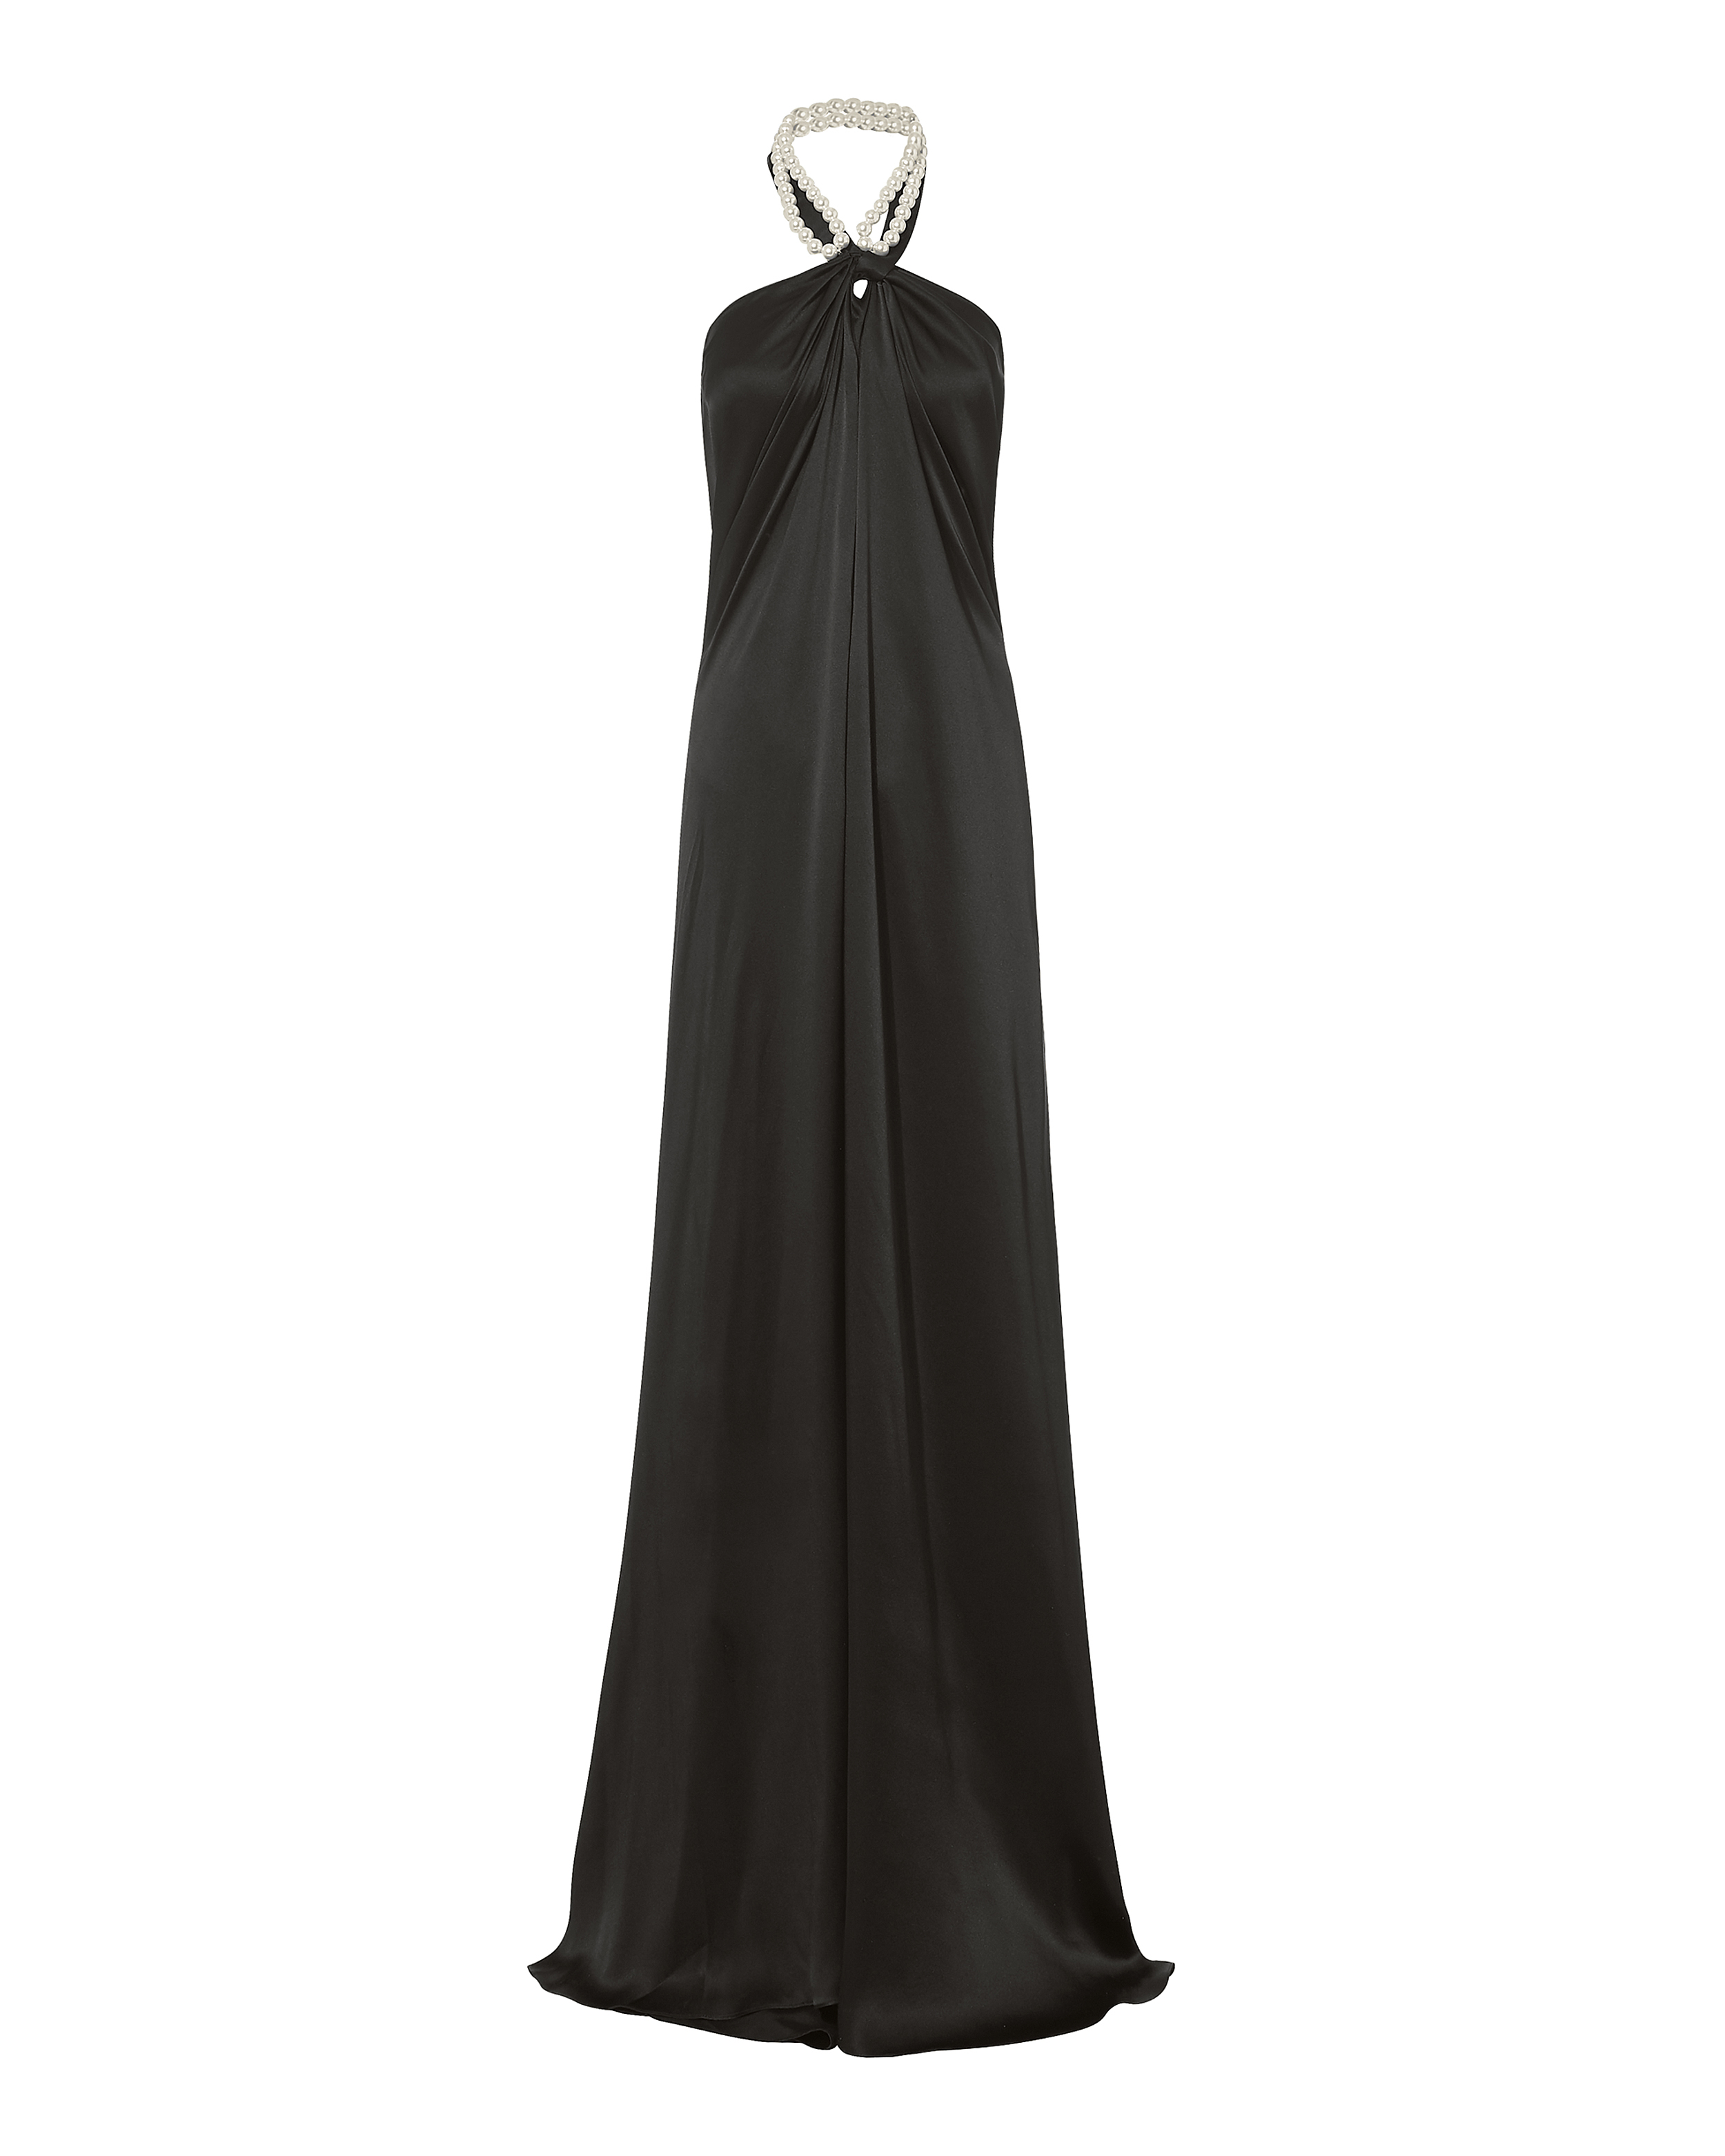 Black Halter Dress with Pearl Details | Adam Selman